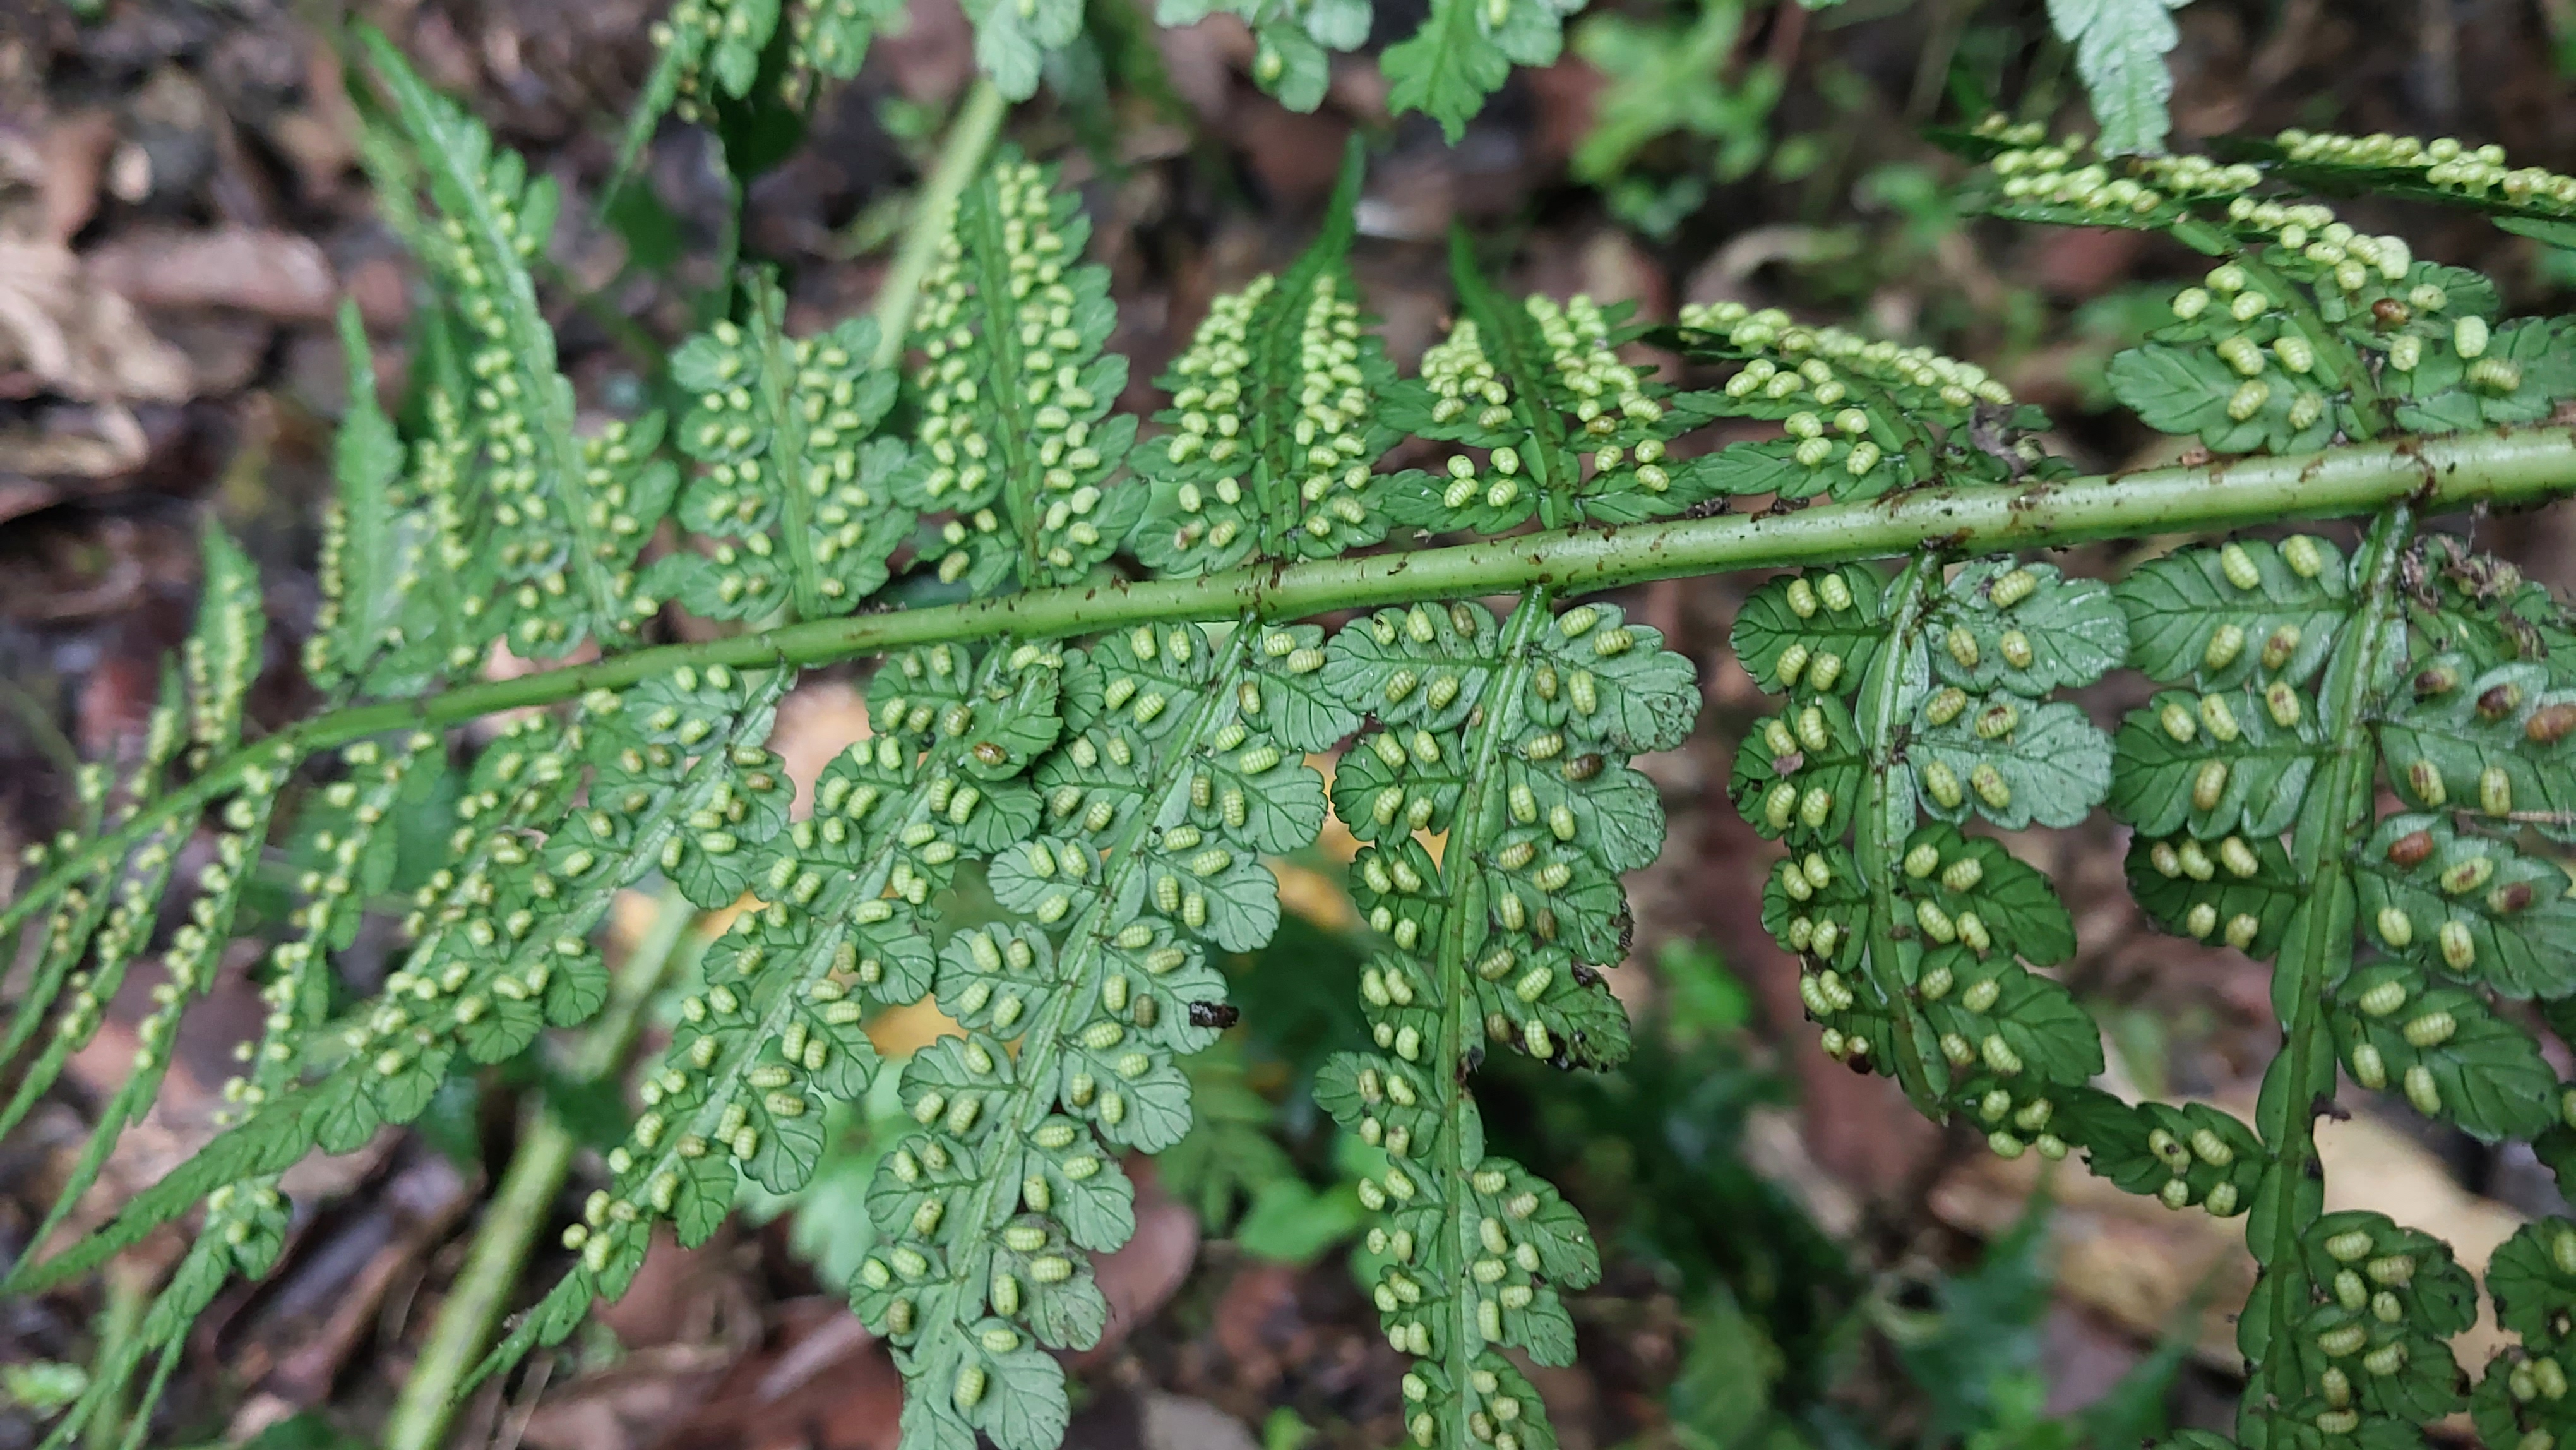 Eupodium pittieri fern